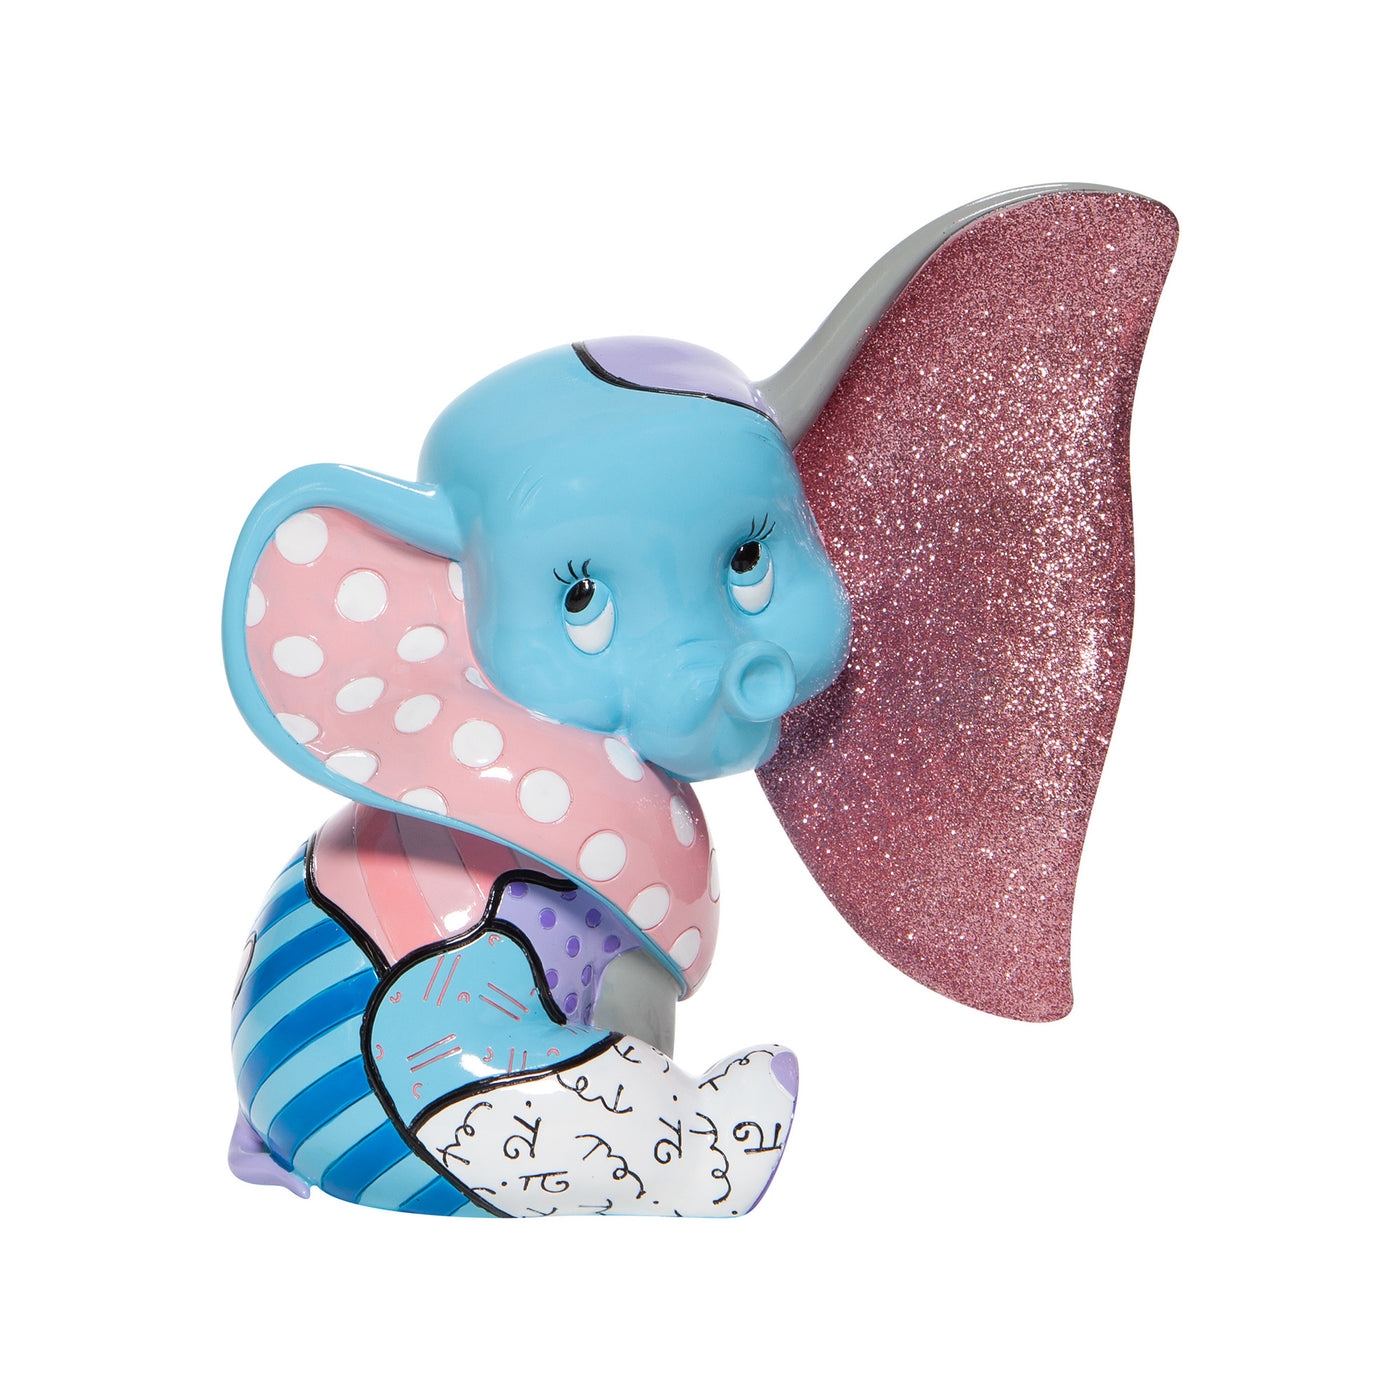 Disney Britto Baby Dumbo Figurine New with Box